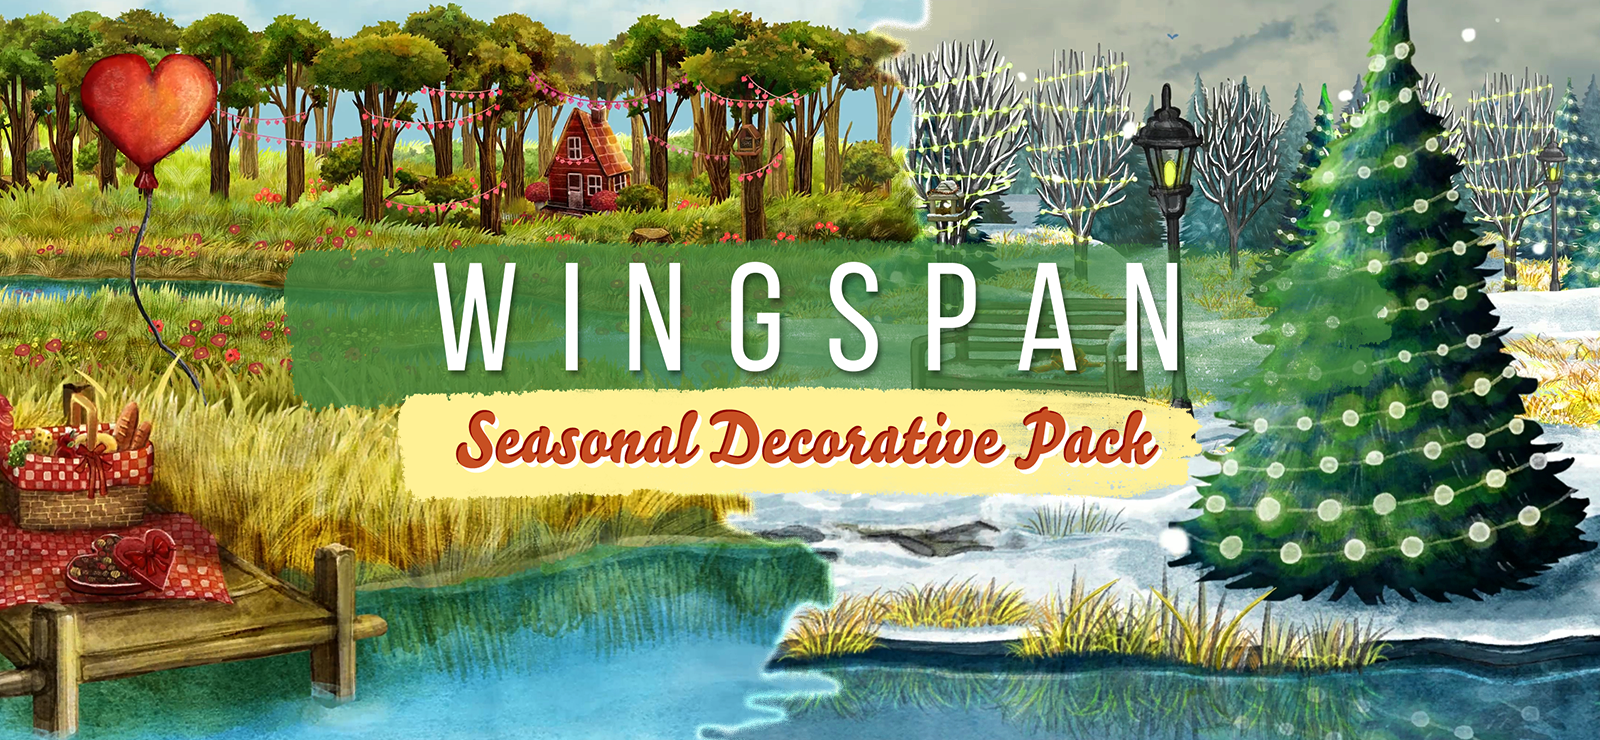 Wingspan - Seasonal Decorative Pack